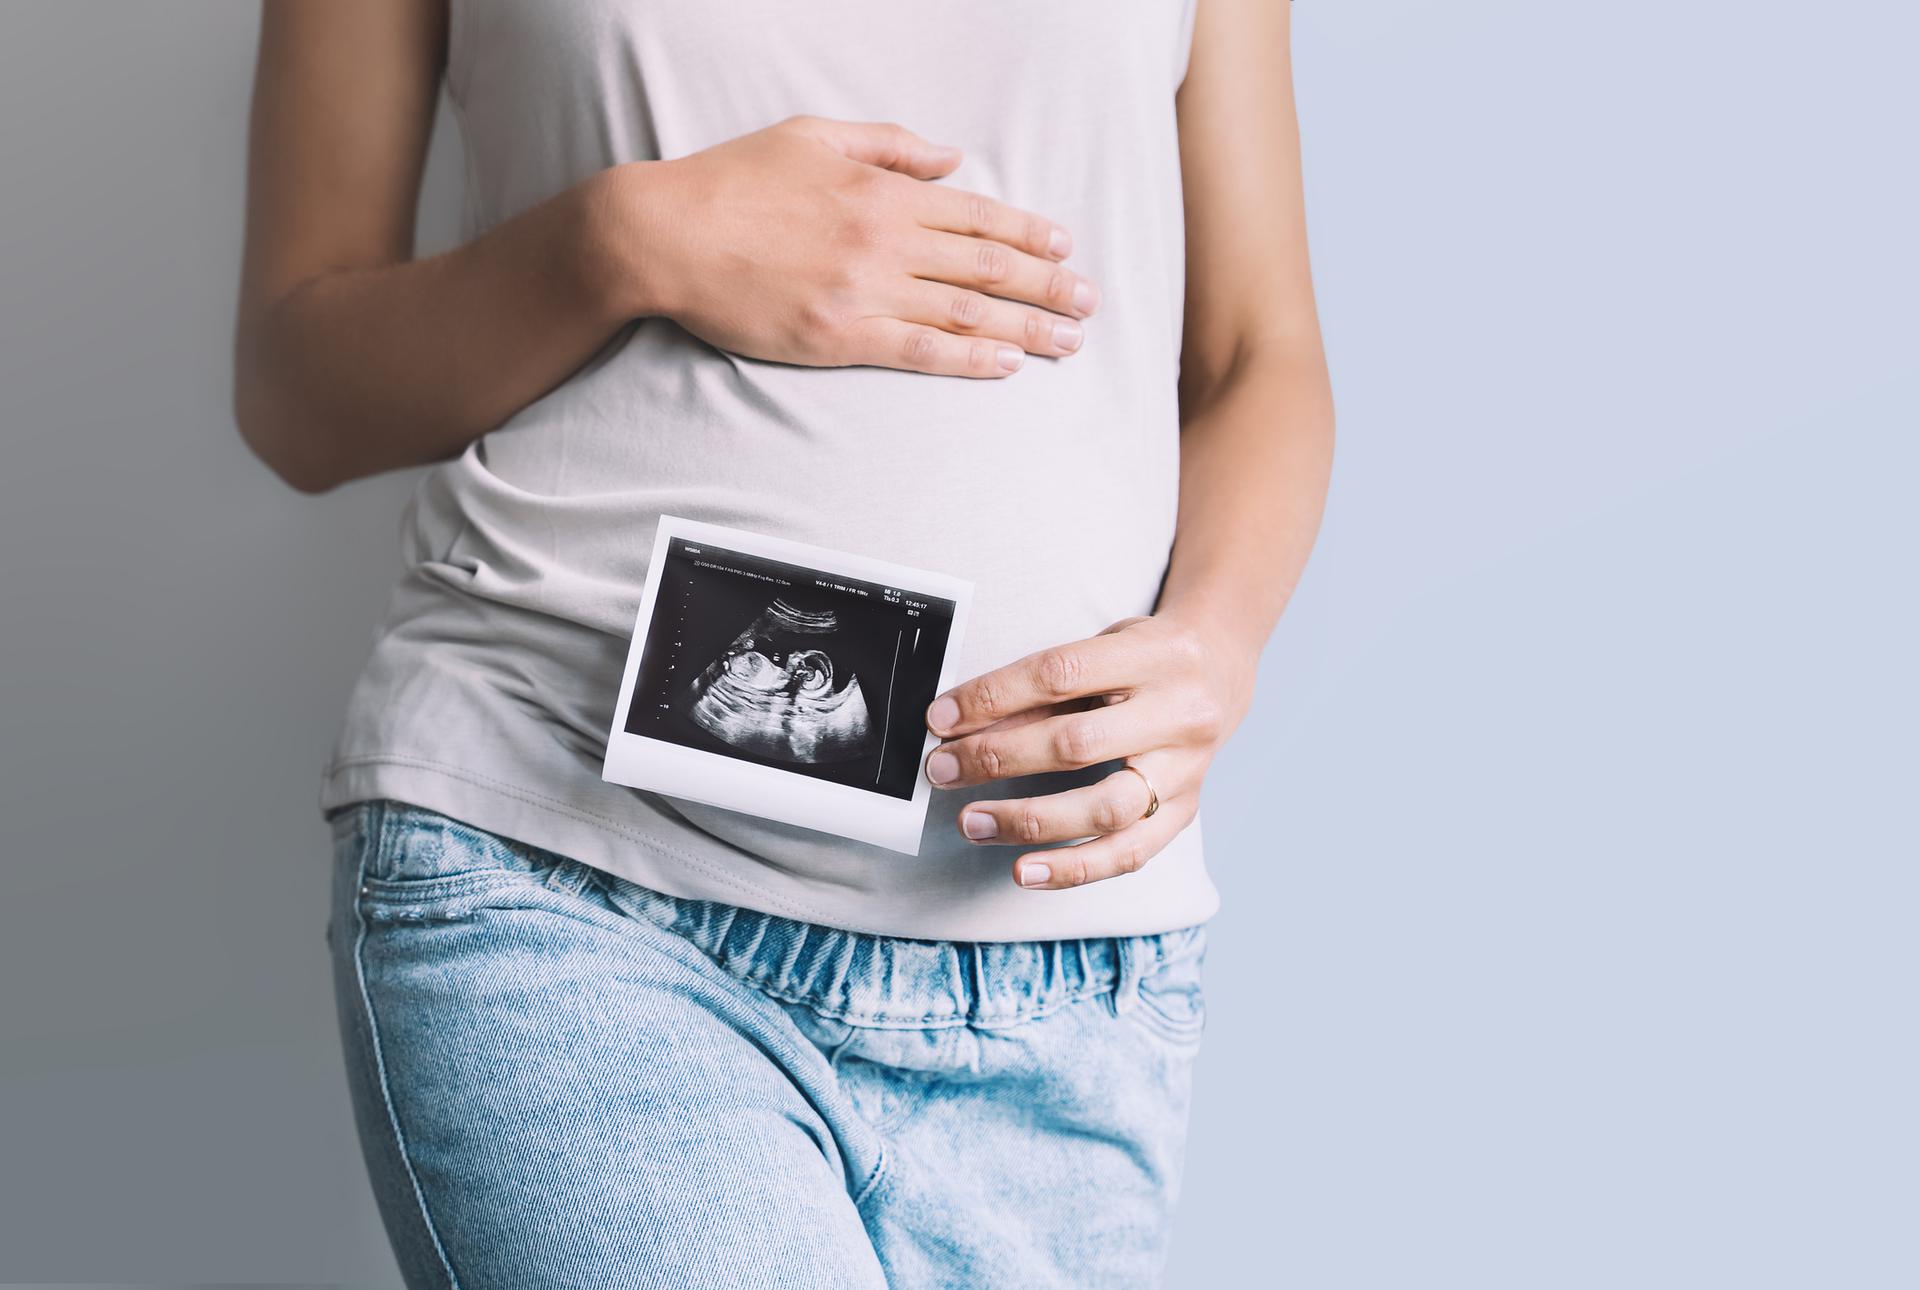 Diarrea en el segundo trimestre de embarazo